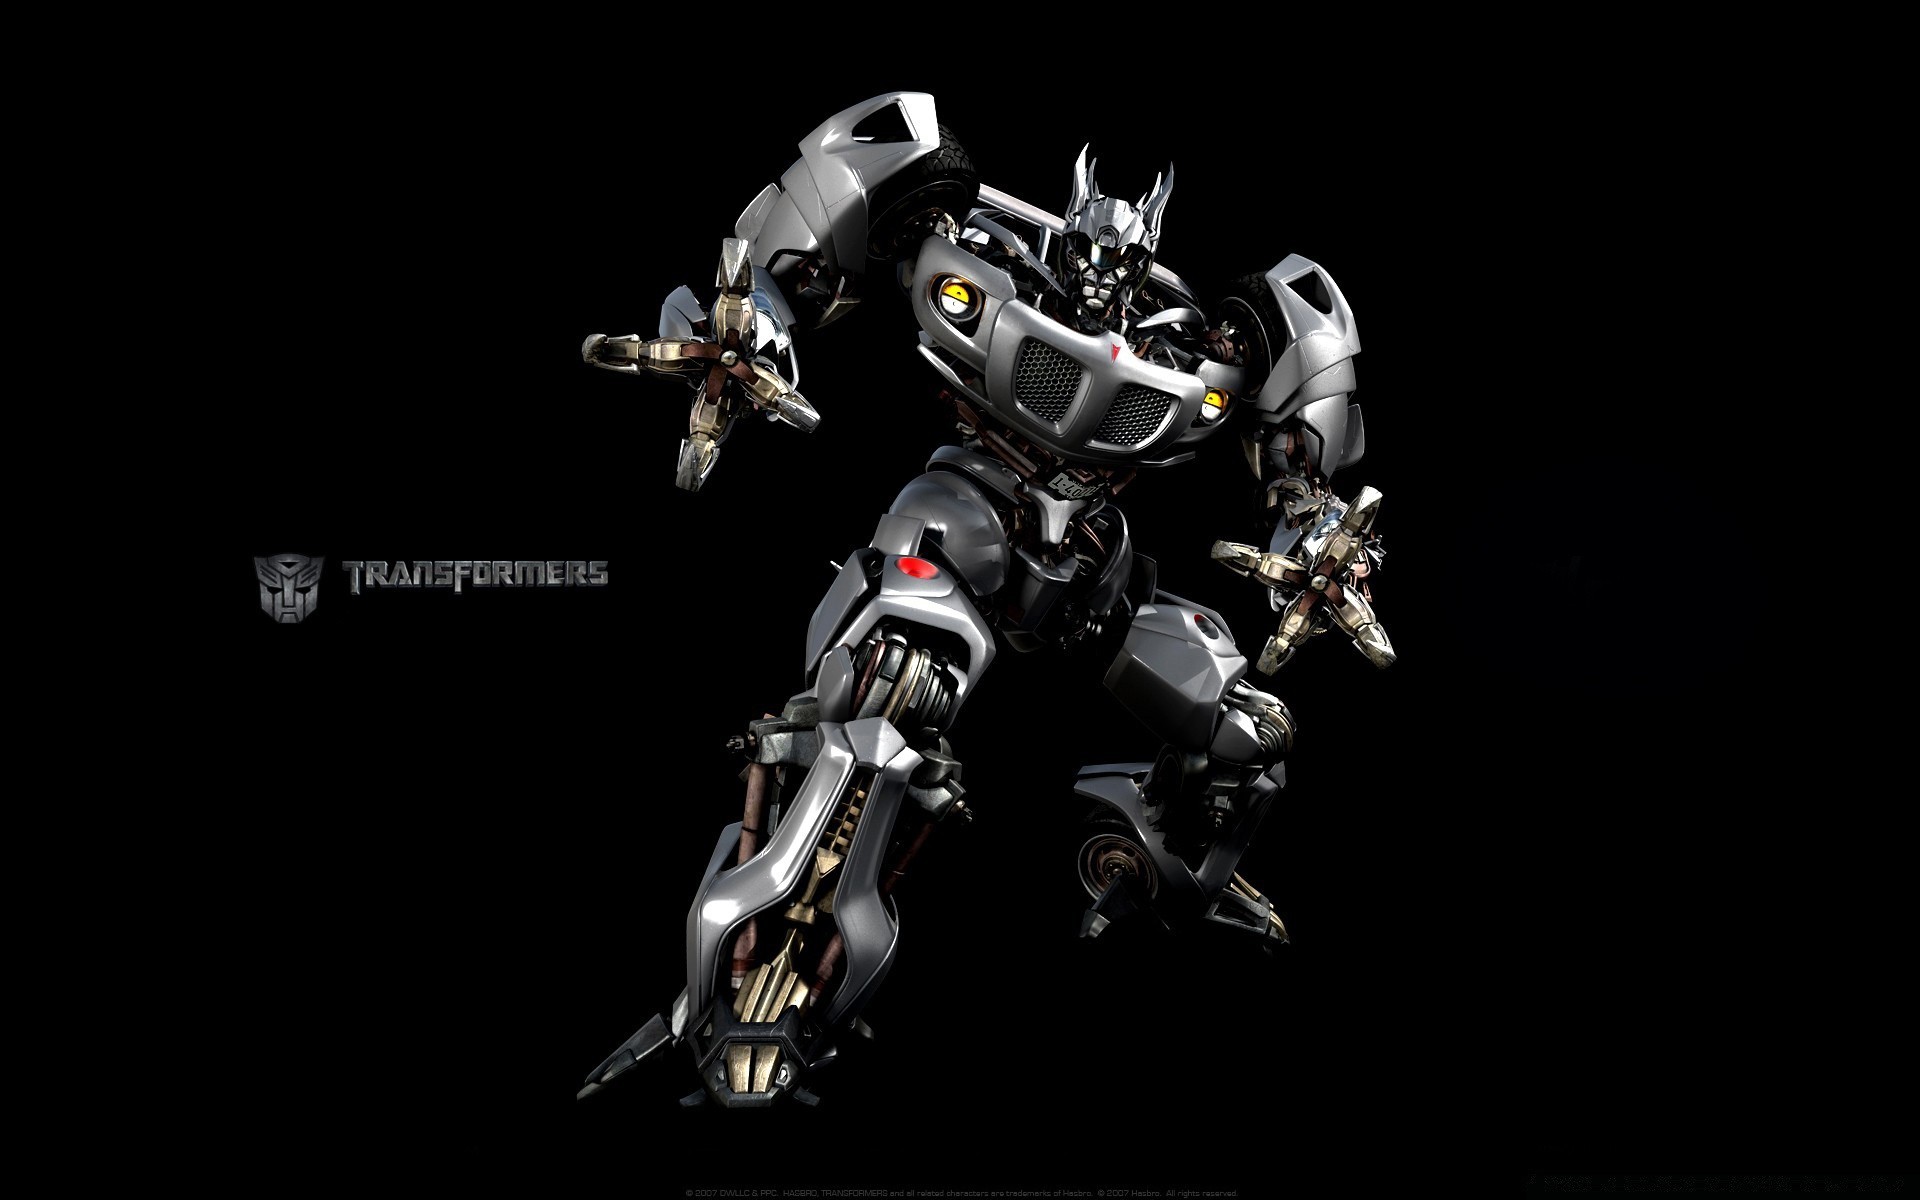 Transformers Science Robot Futuristic Cyborg Chrome - Jazz Transformers - HD Wallpaper 